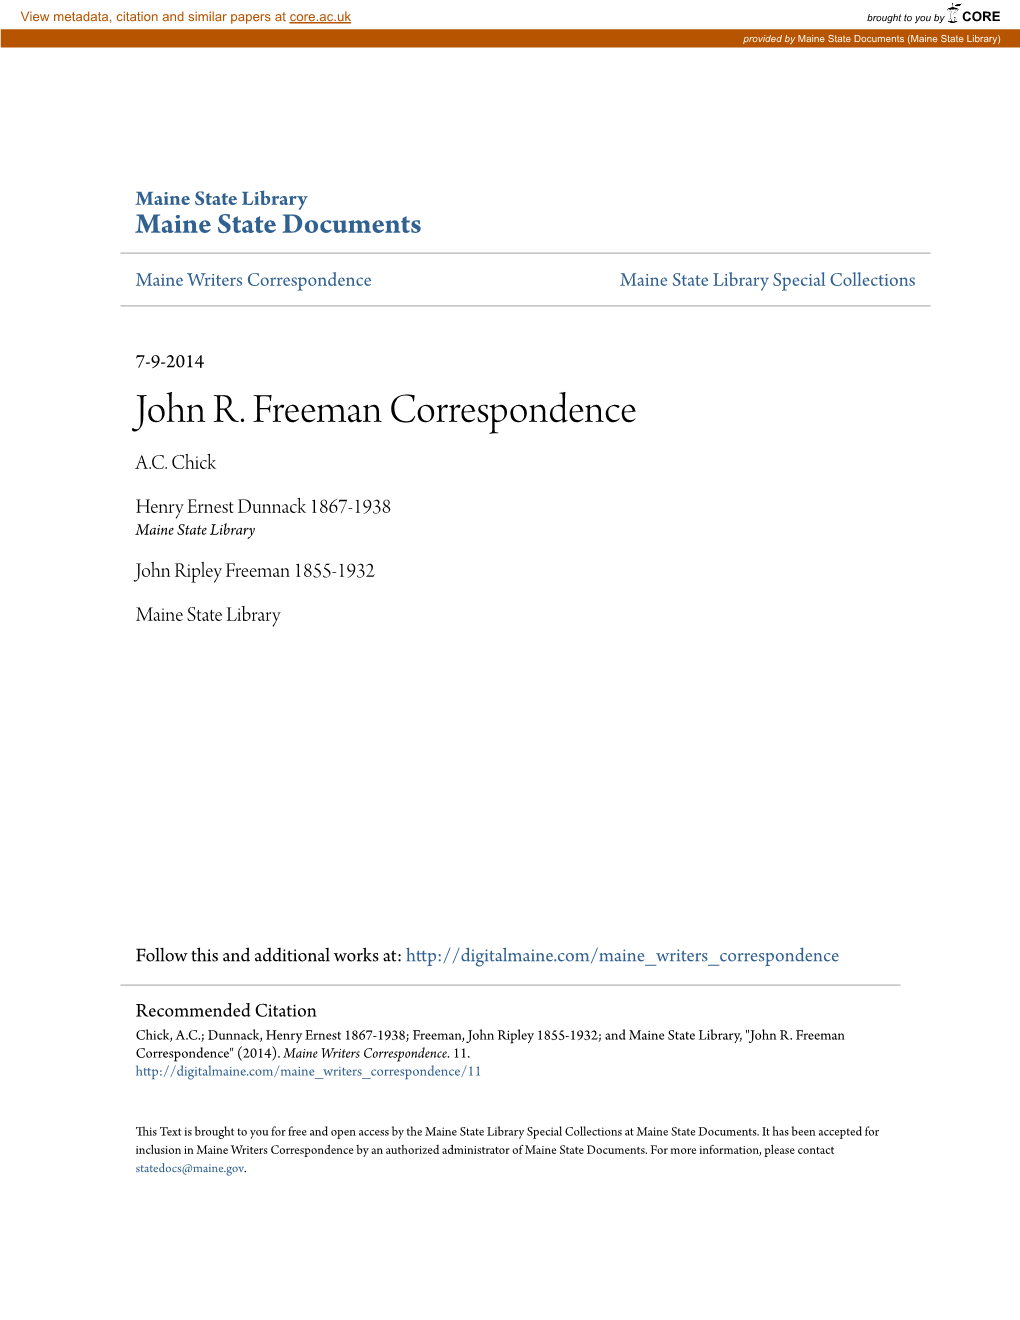 John R. Freeman Correspondence A.C